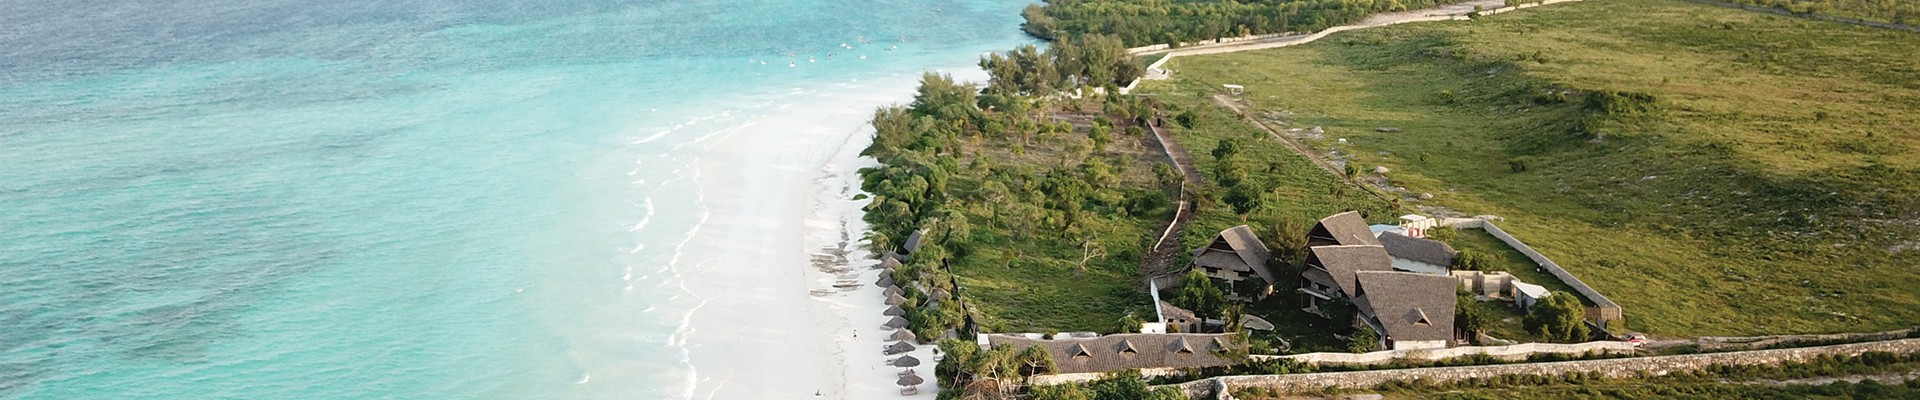 5* Emerald Resort & Spa - Zanzibar Package (7 Nights)